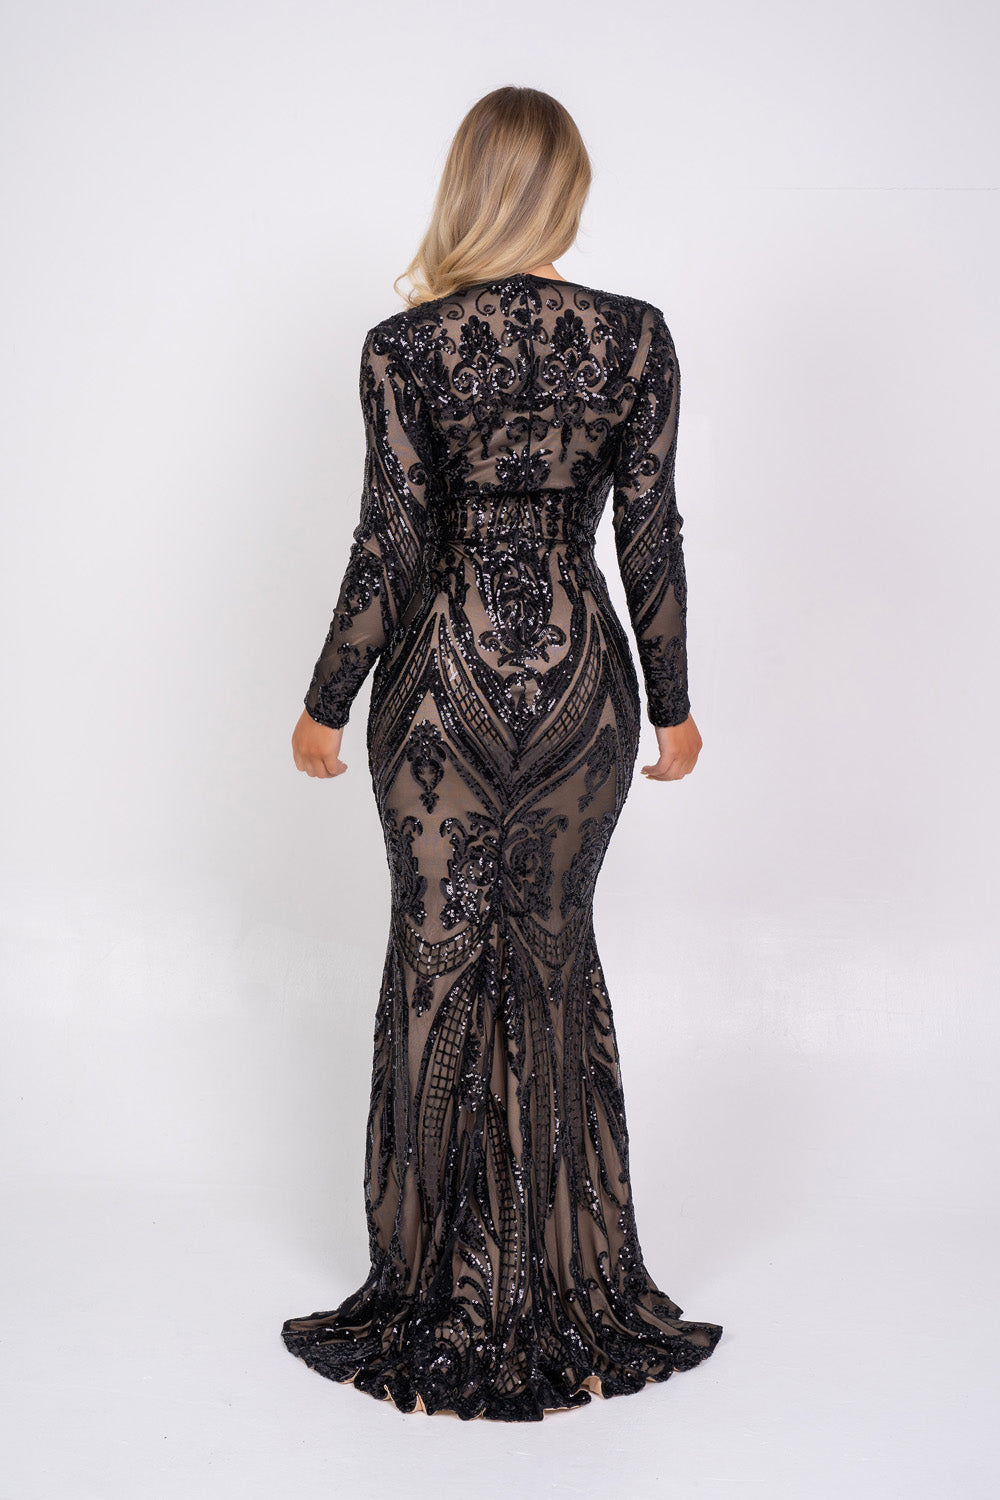 Arabella Black Luxe Tribal Vip Sequin Plunge Fishtail Dress